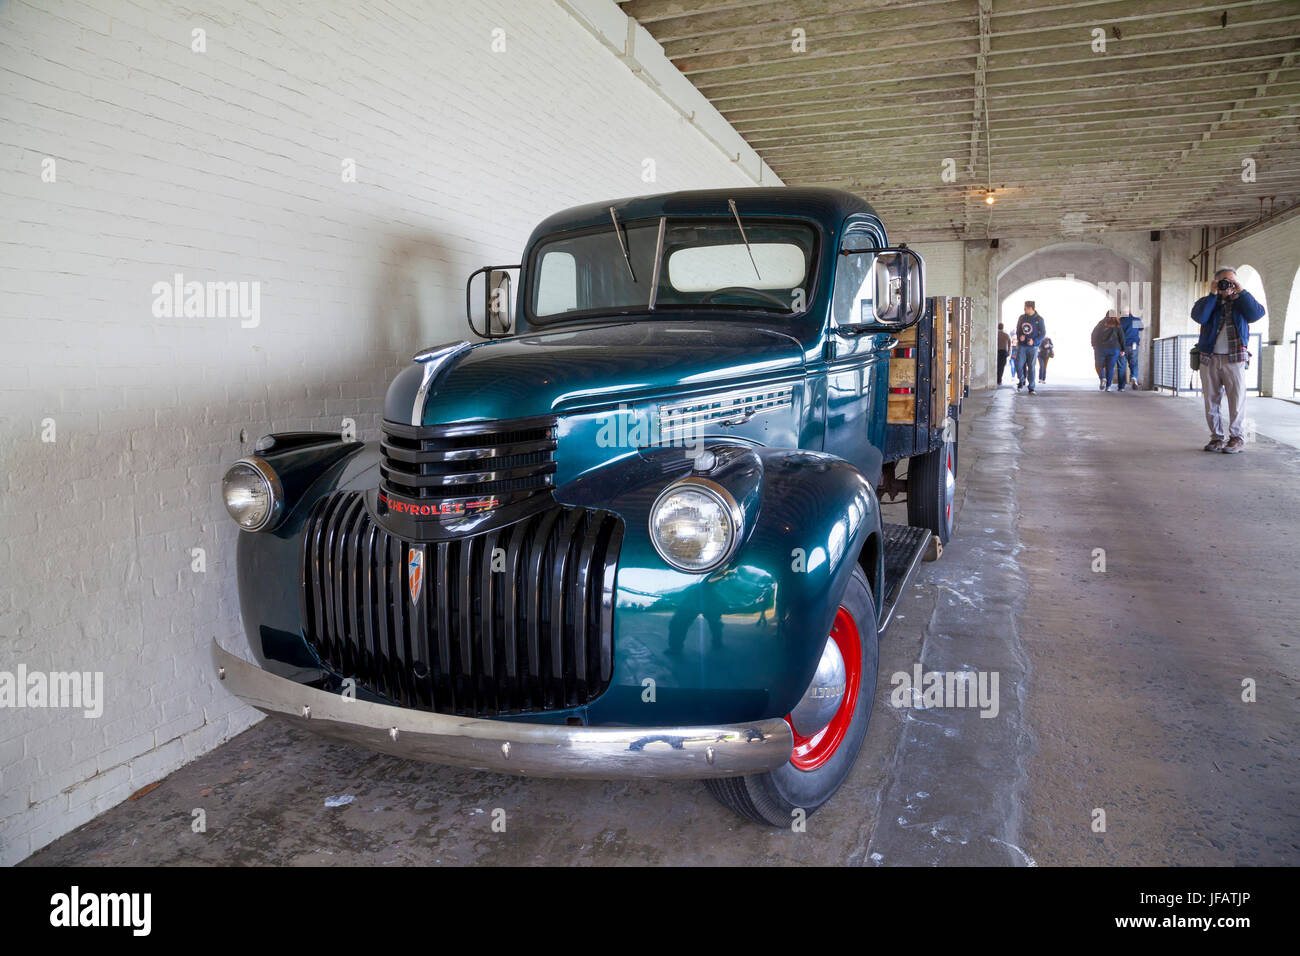 Chevy vintage truck inside Alcatraz penitentiary, San Francisco, California, USA Stock Photo